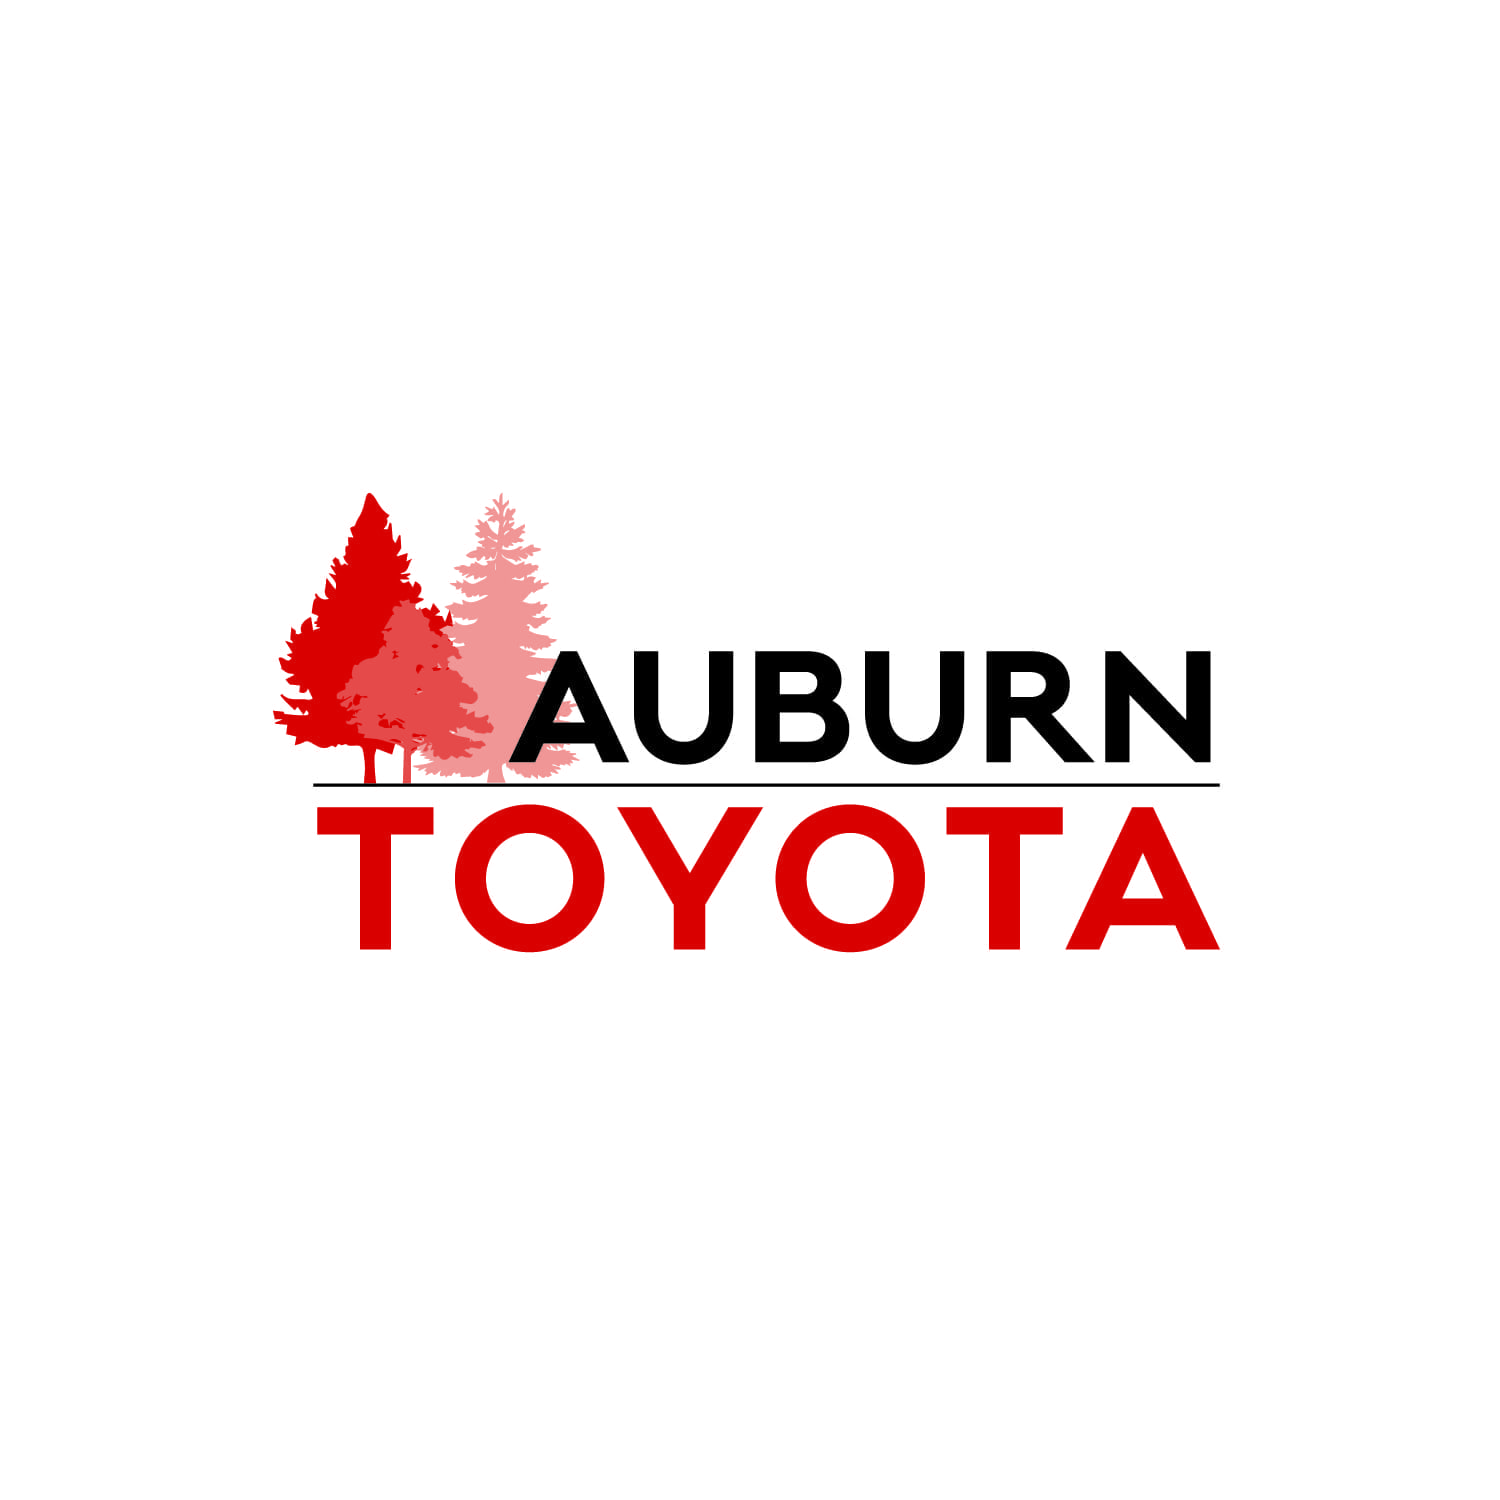 Auburn Toyota logo